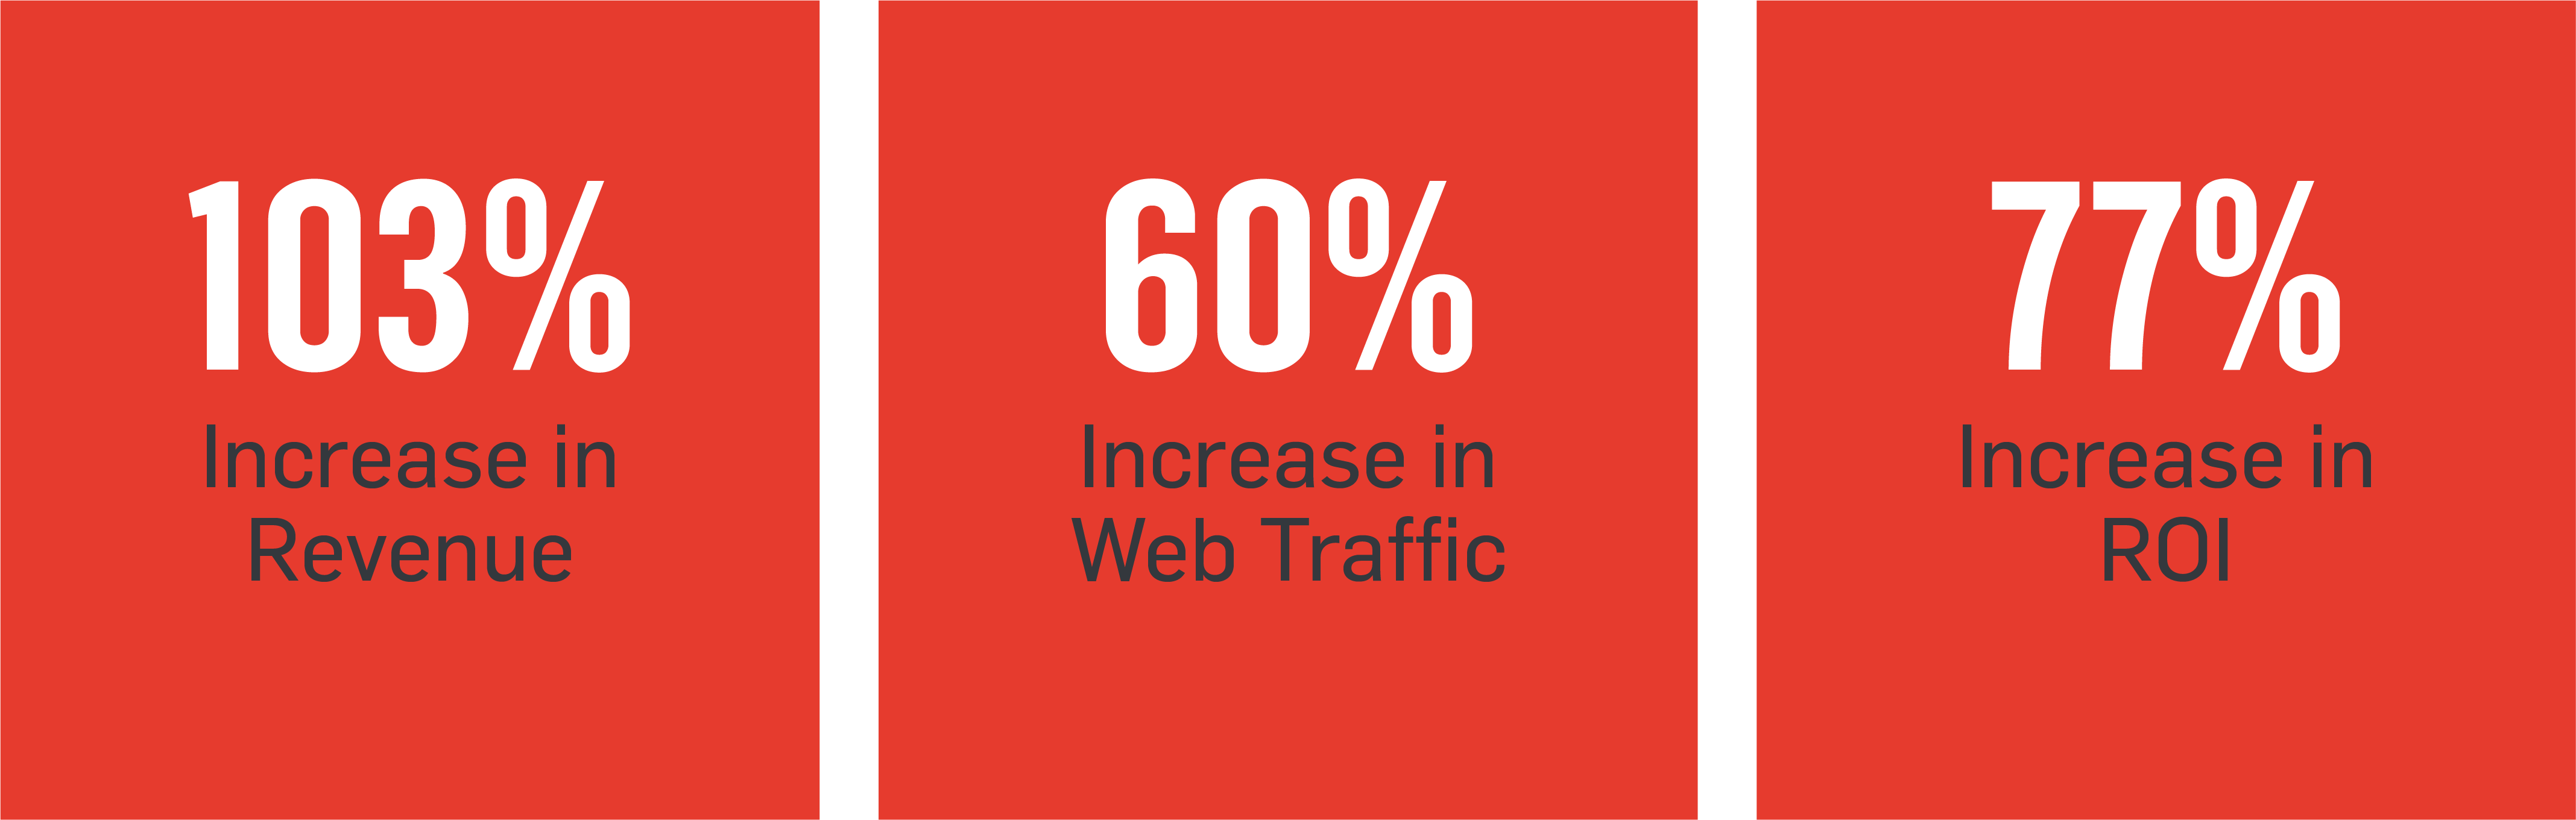 103% Increase in Revenue, 60% Increase in Web Traffic, 77% Increase in ROI